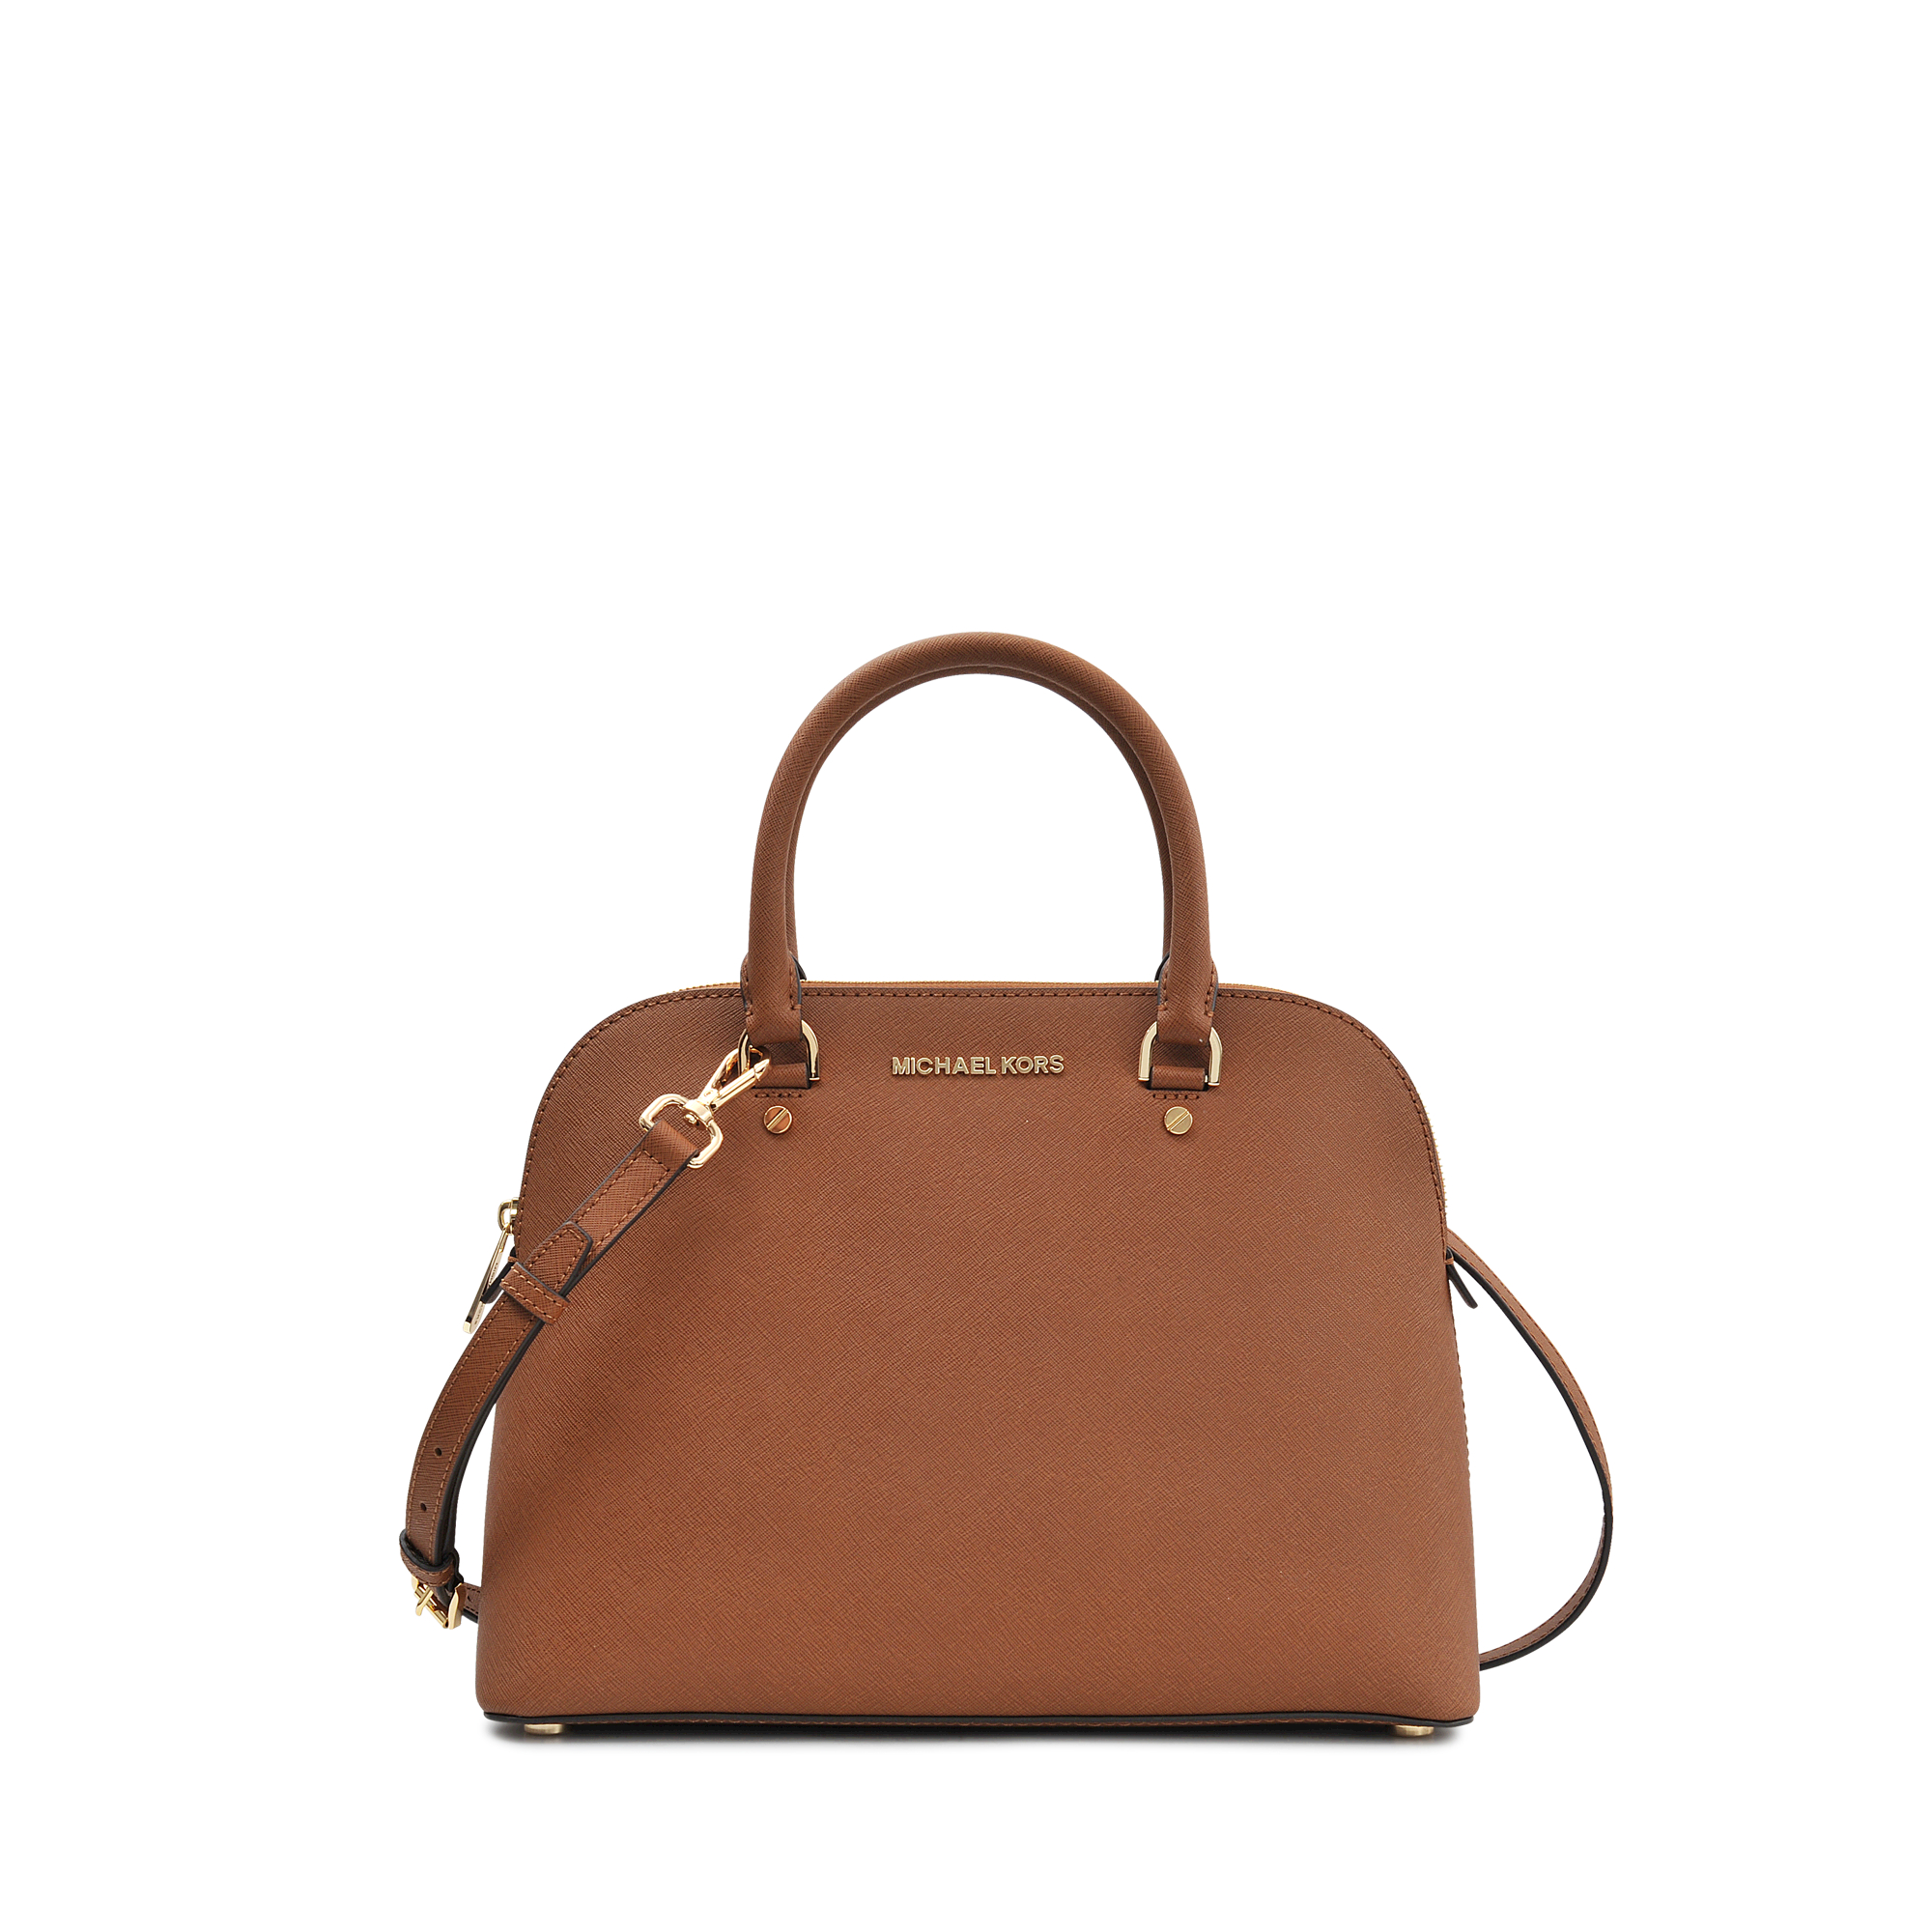 MK 2013 handbags